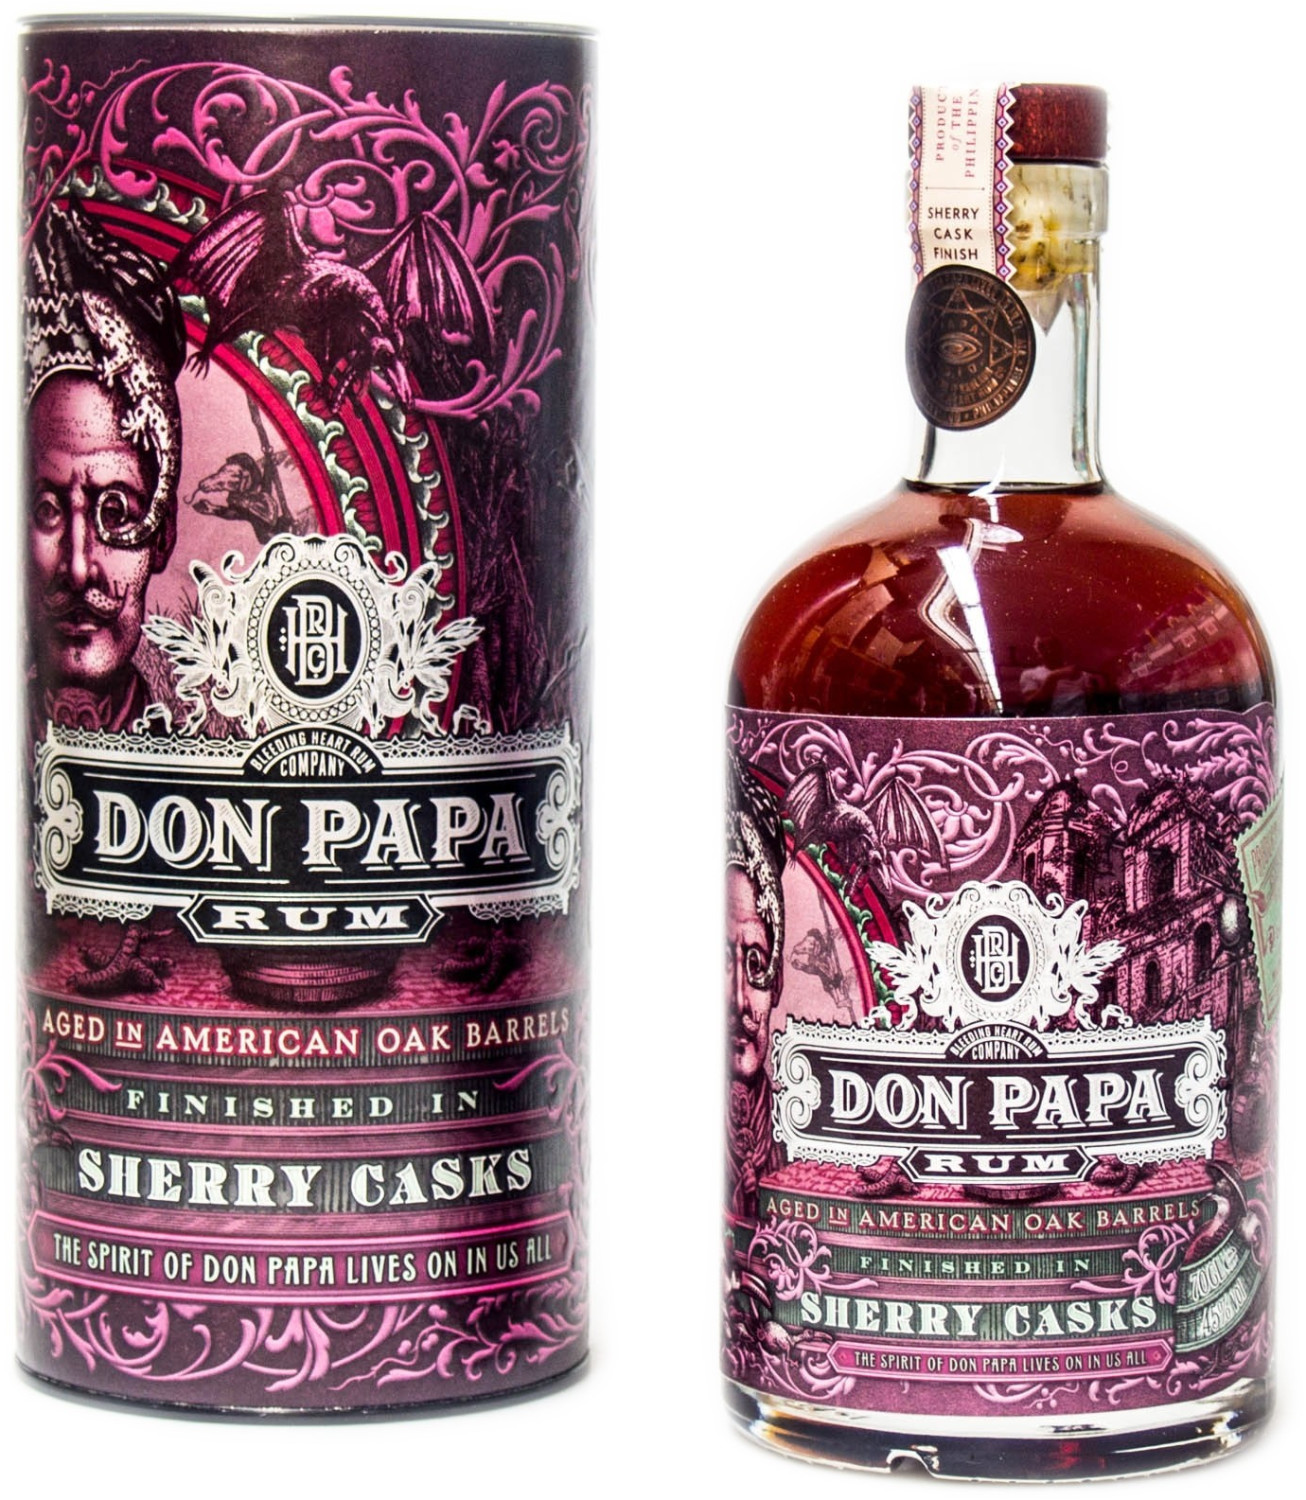 Don Papa Rum Sherry Preisvergleich (Februar | Cask Preise) ab 2024 85,10 € bei 45% 0,7l